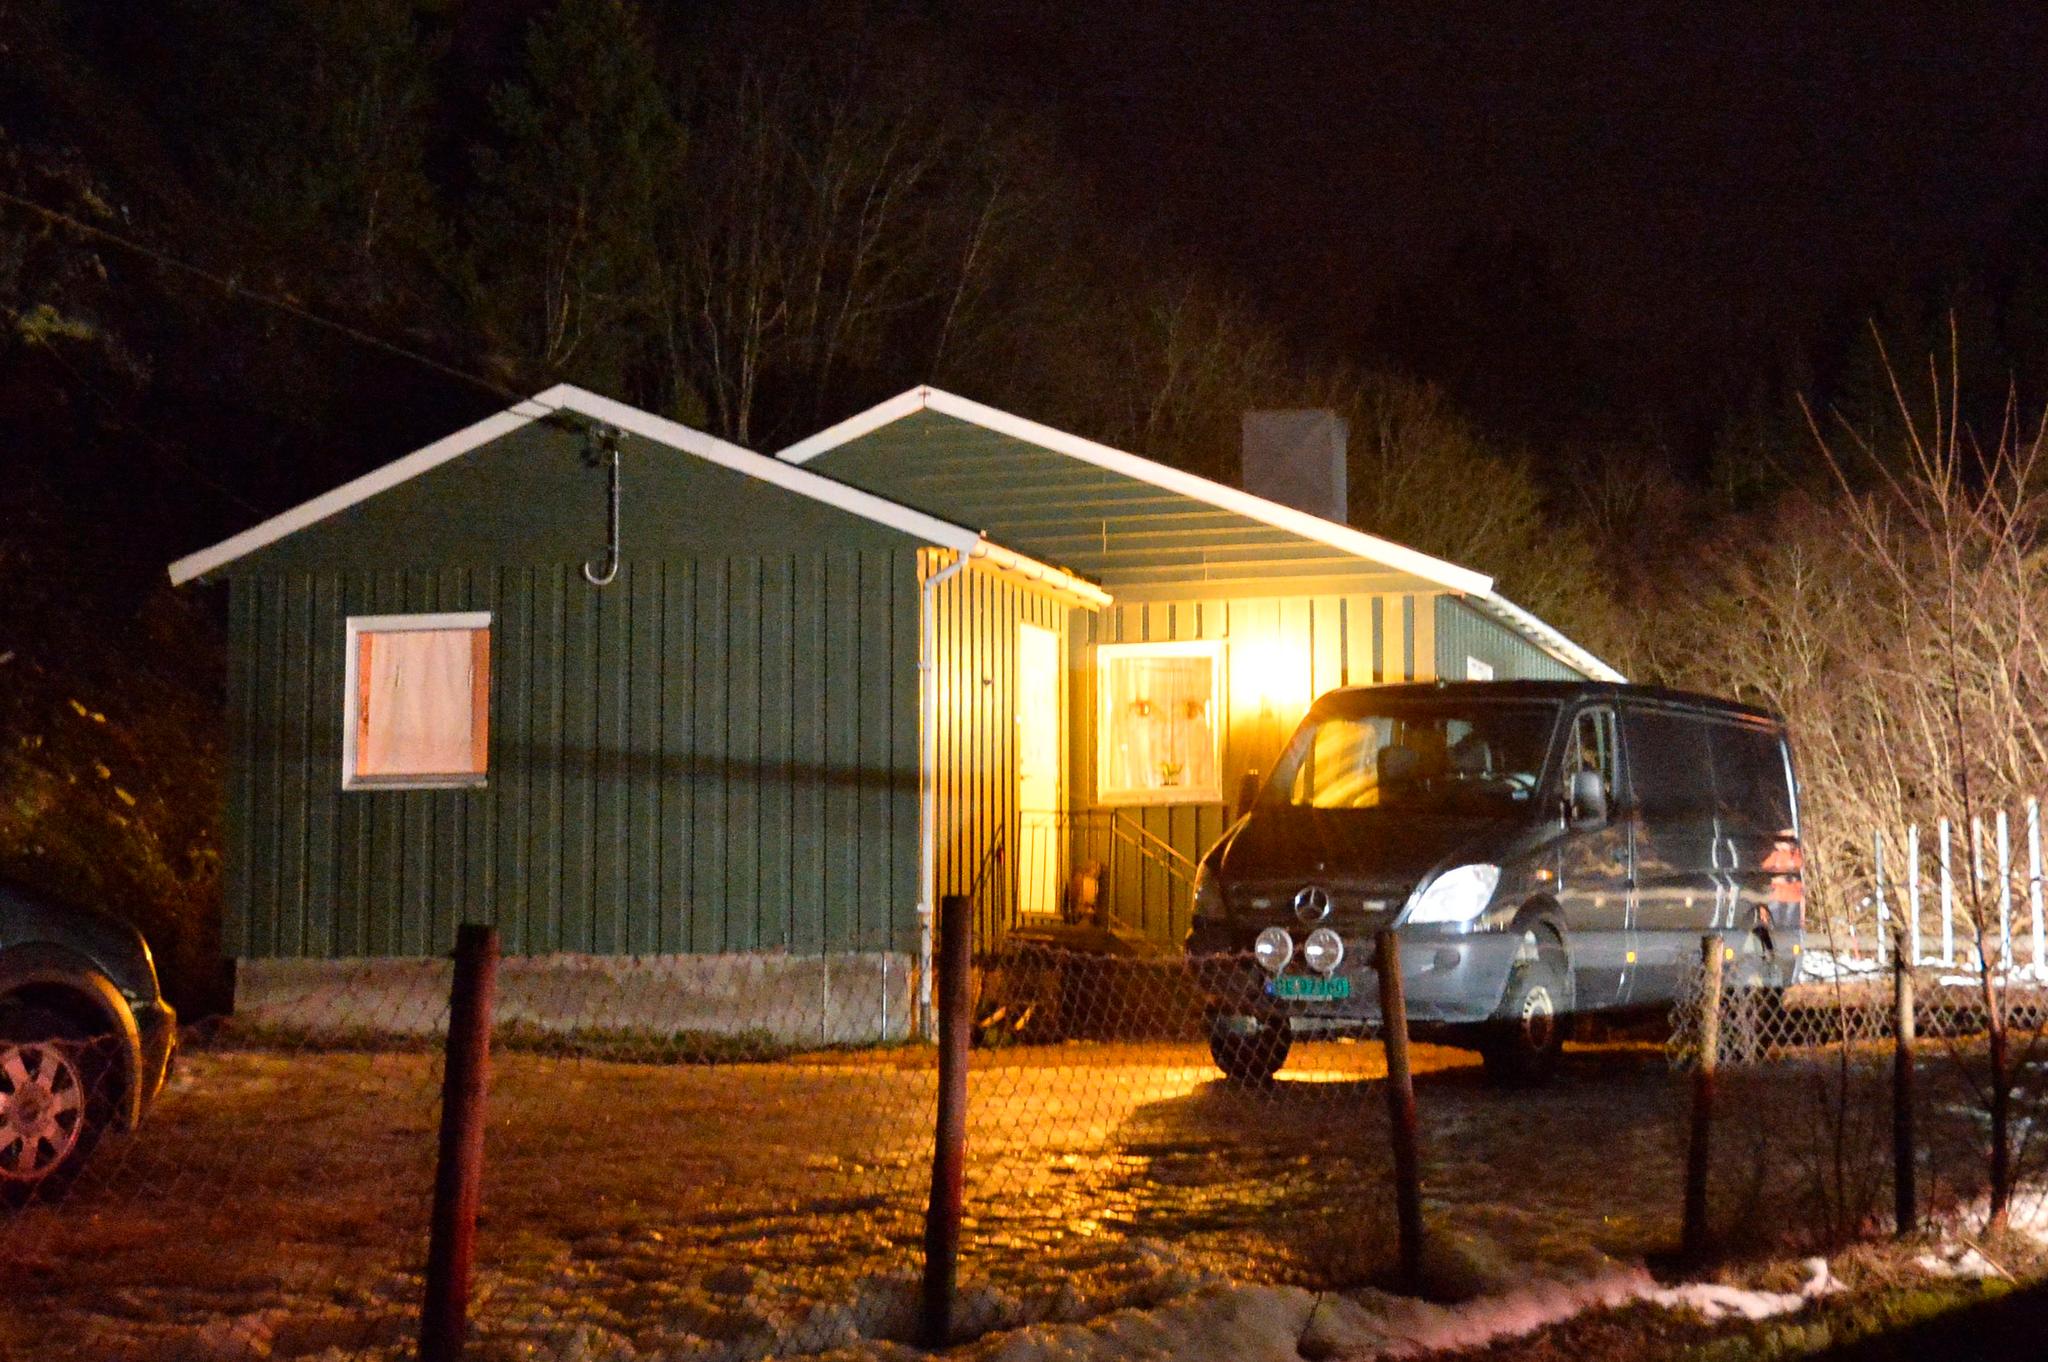 Råger Holte ble funnet drept i dette huset på Ler i Melhus kommune i januar.
Foto: Ned Alley / NTB scanpix